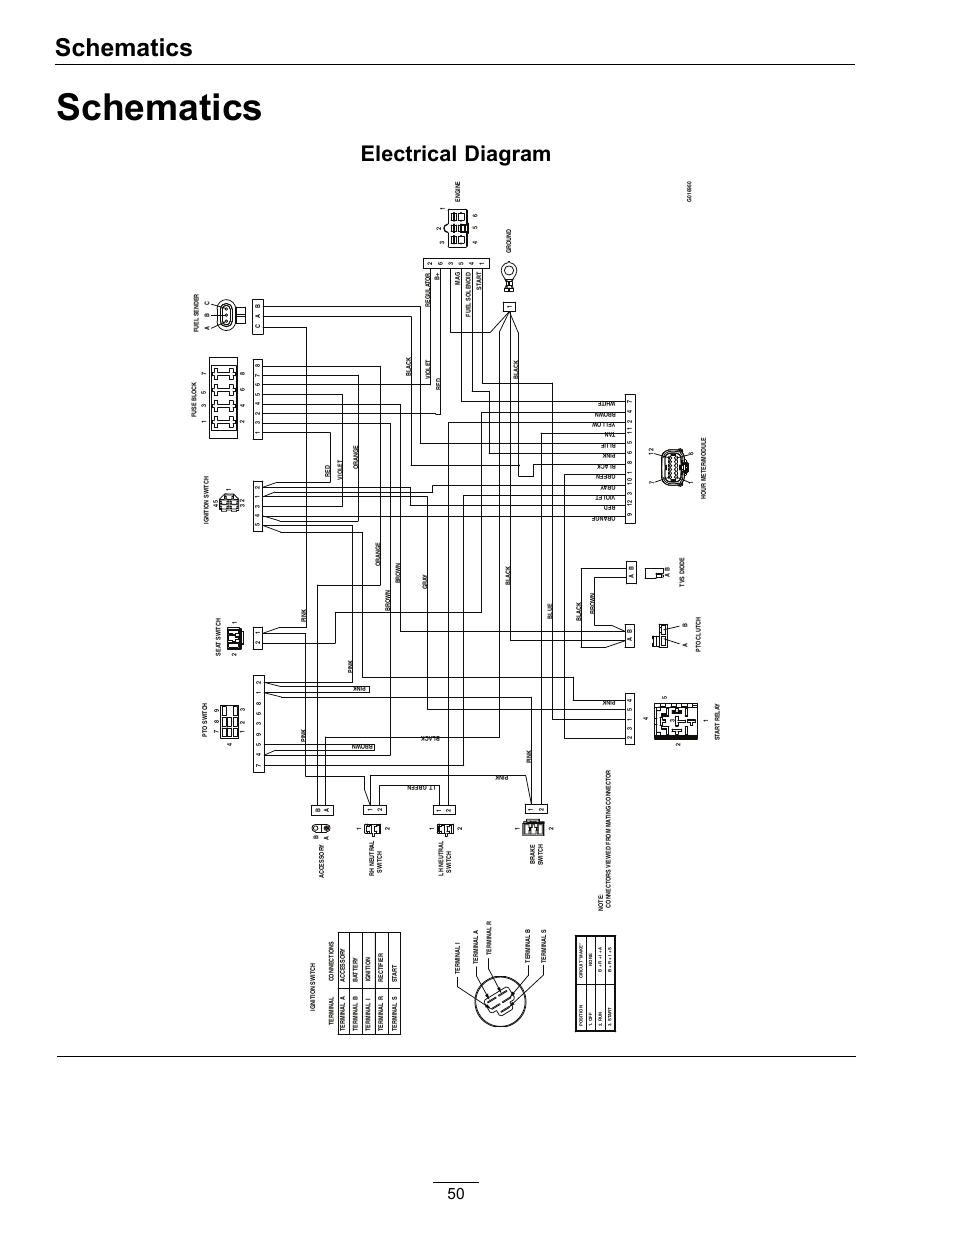 1986 honda gl 1200 aspencade gold wing wiring diagram